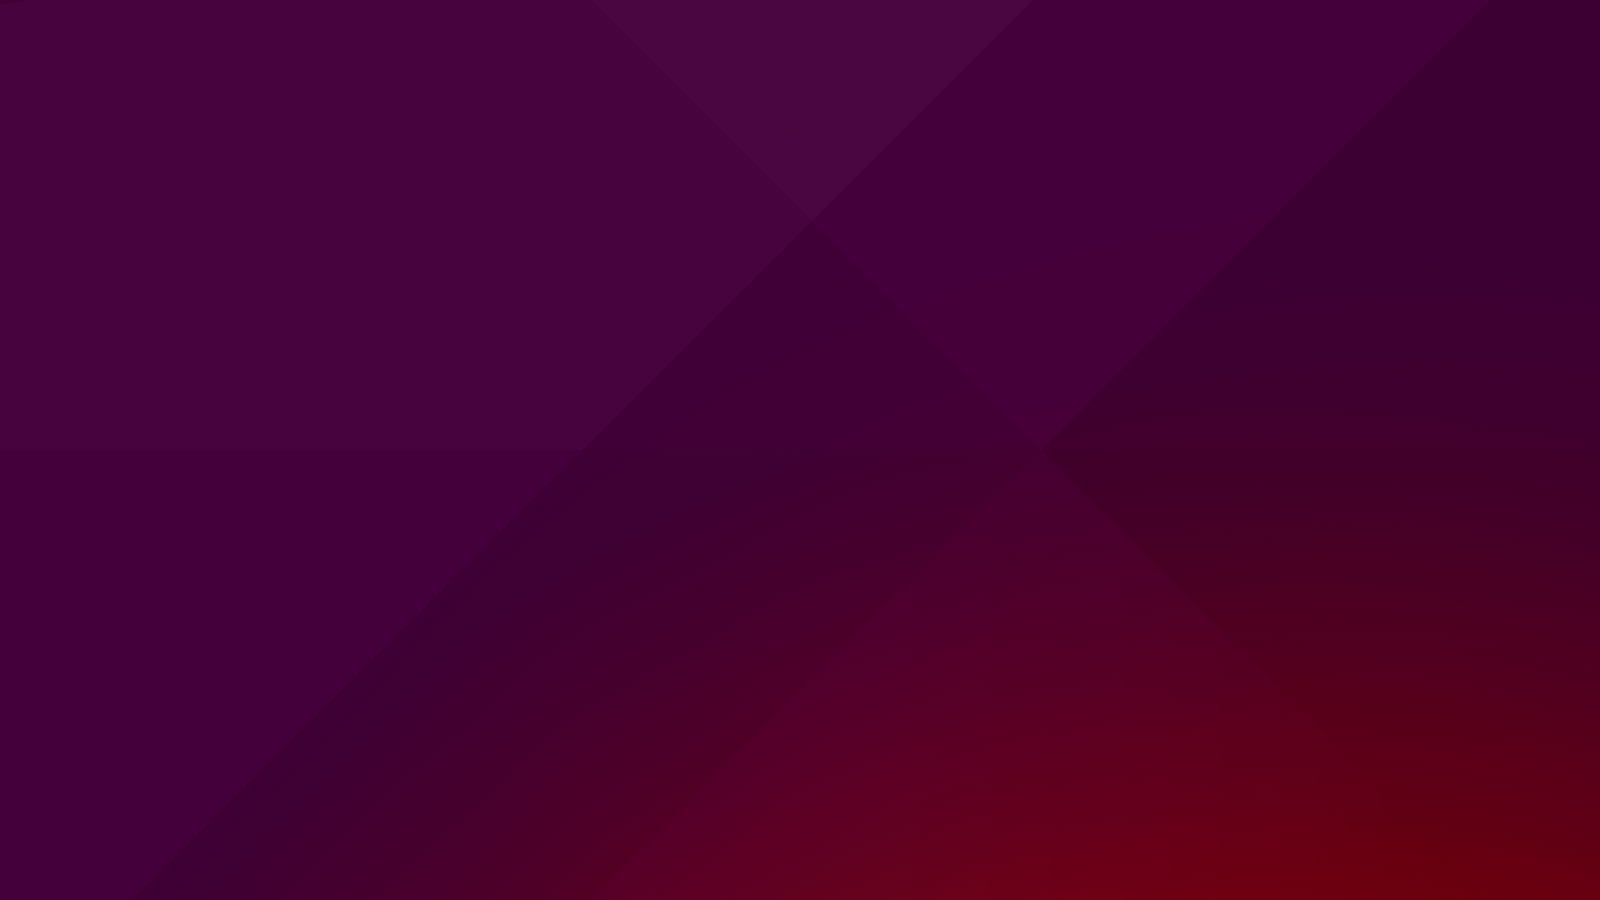 Ubuntu 15.04 Vivid Vervet Default Wallpaper Revealed Web Upd8